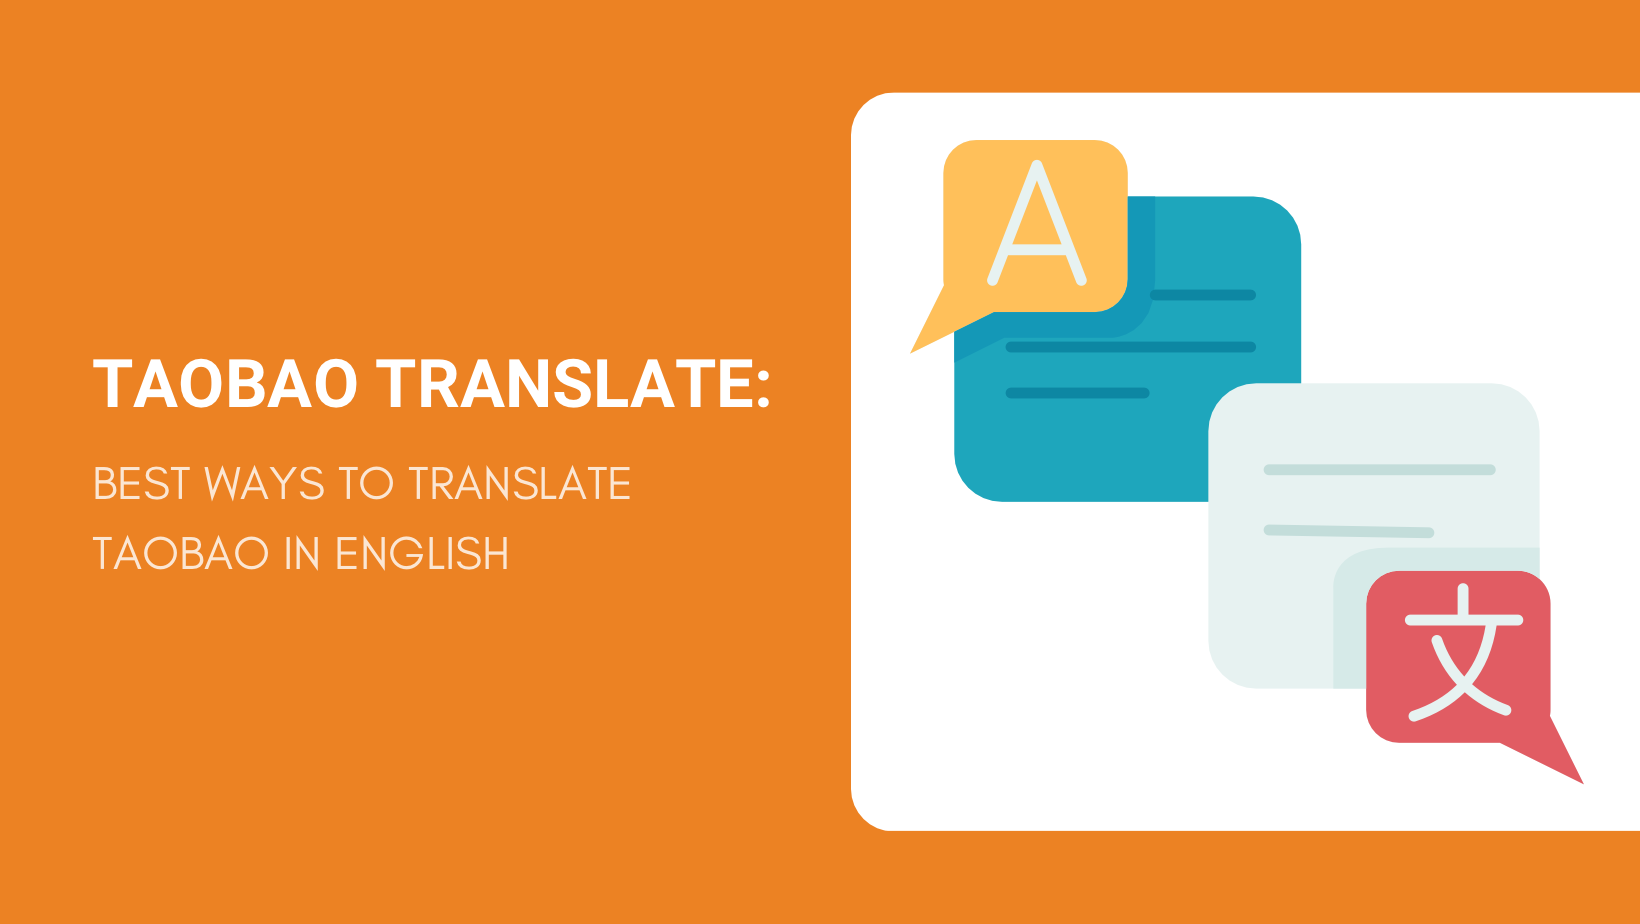 TAOBAO TRANSLATE BEST WAYS TO TRANSLATE TAOBAO IN ENGLISH